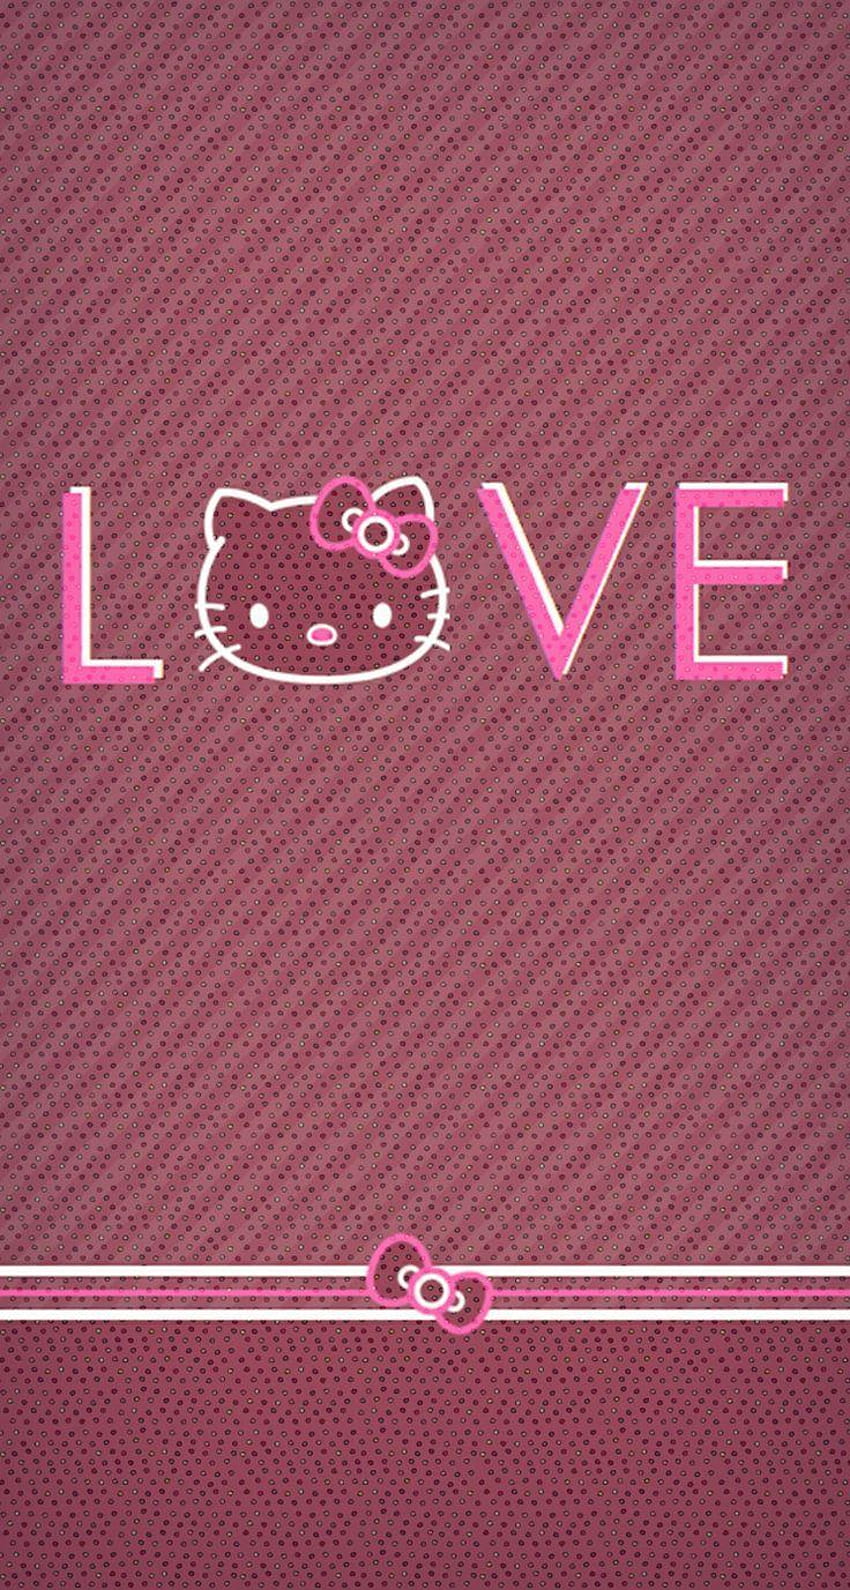 Hello Kitty Neon Light Sign Background 4K Wallpaper iPhone HD